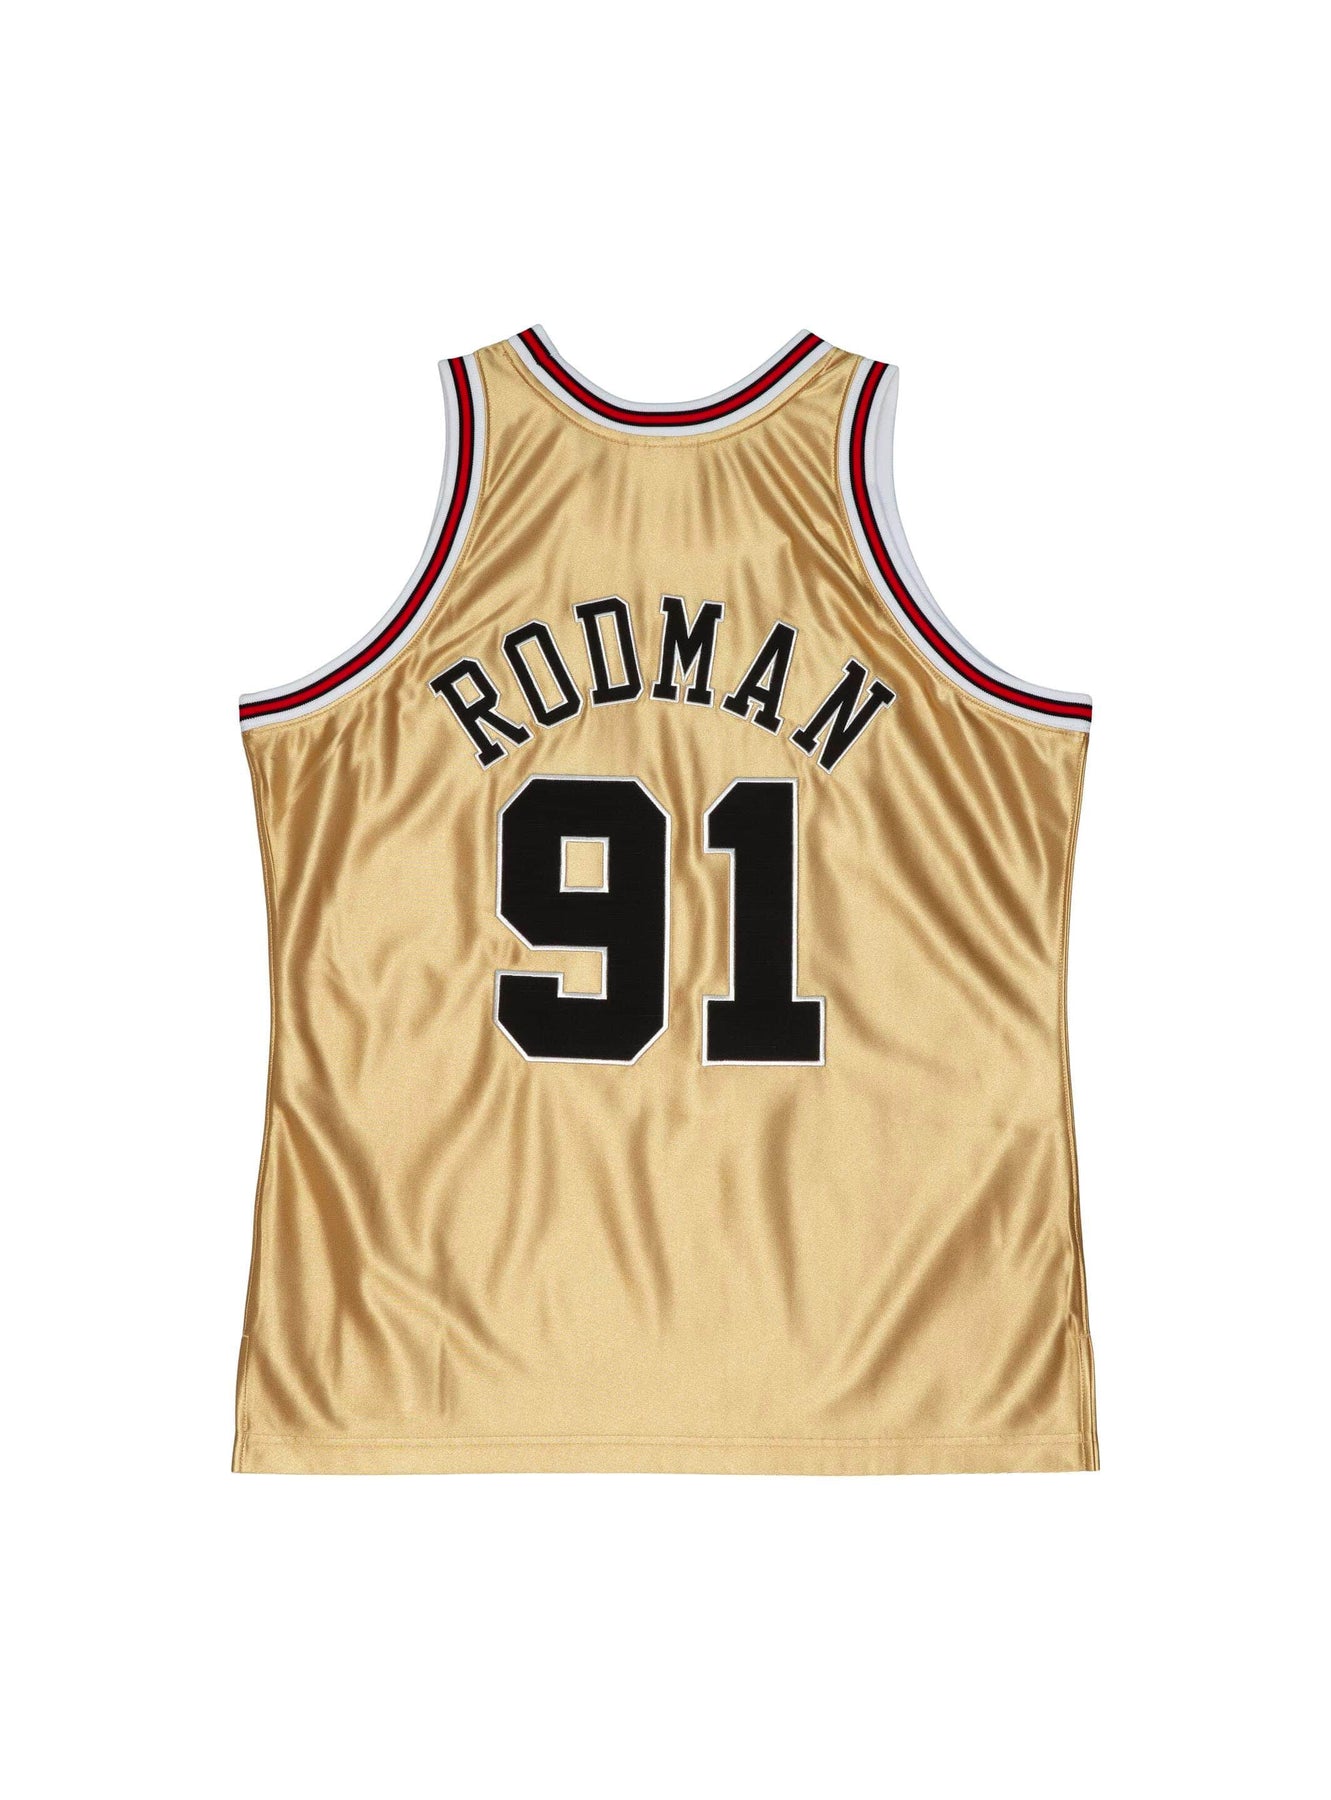 NBA Jersey Chicago Bulls No.91 Rodman Classic Jersey Sports Top